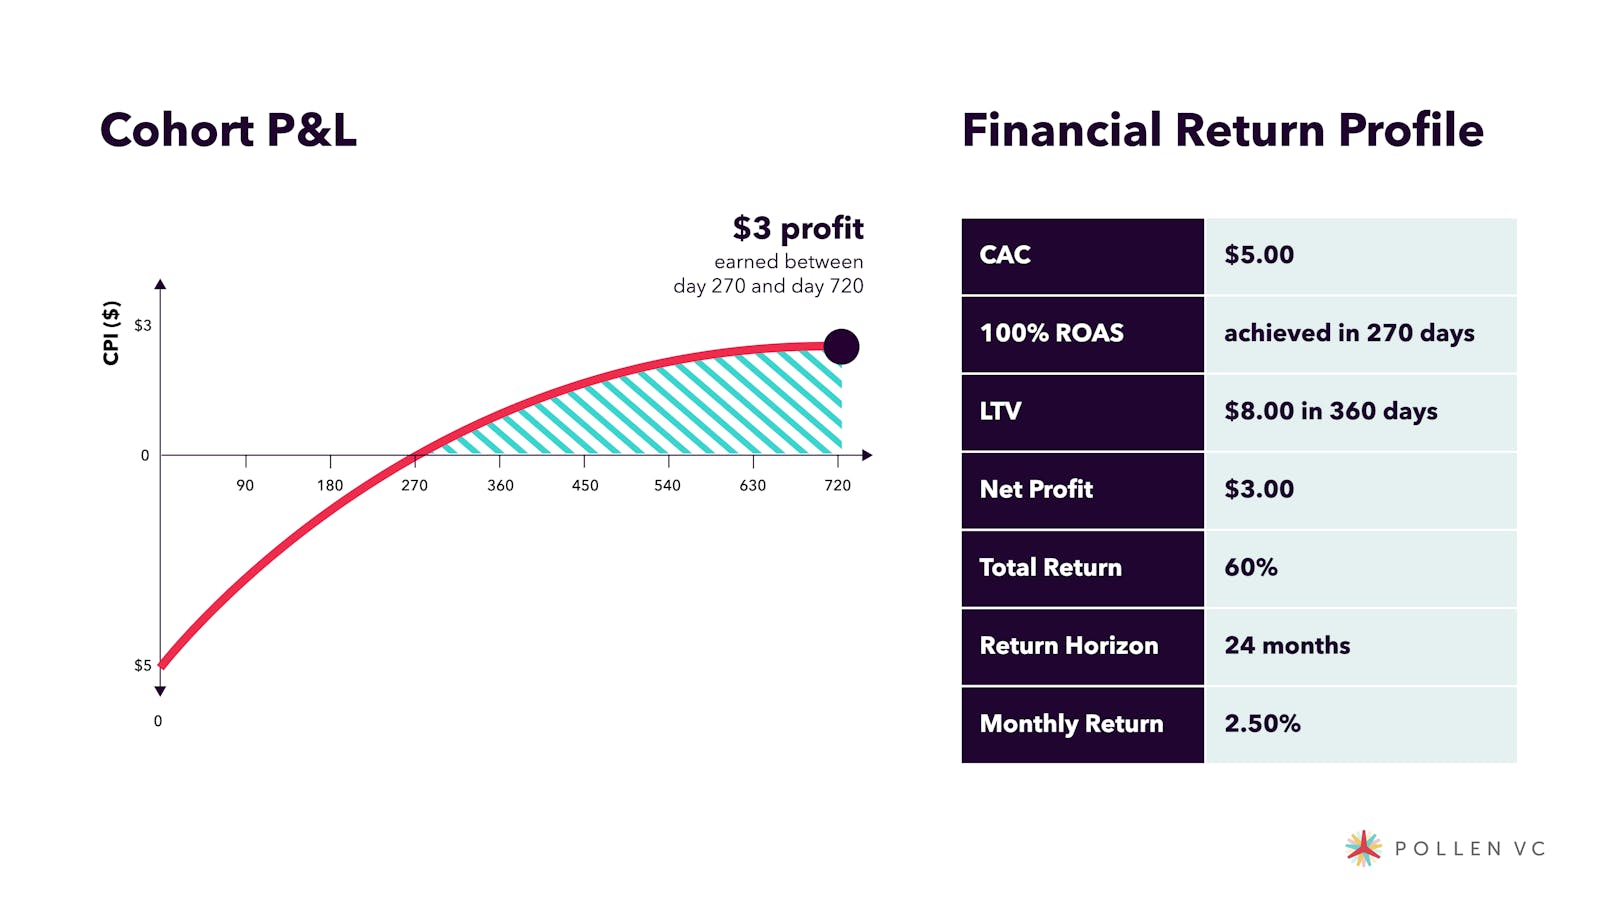 Financial Return Profile